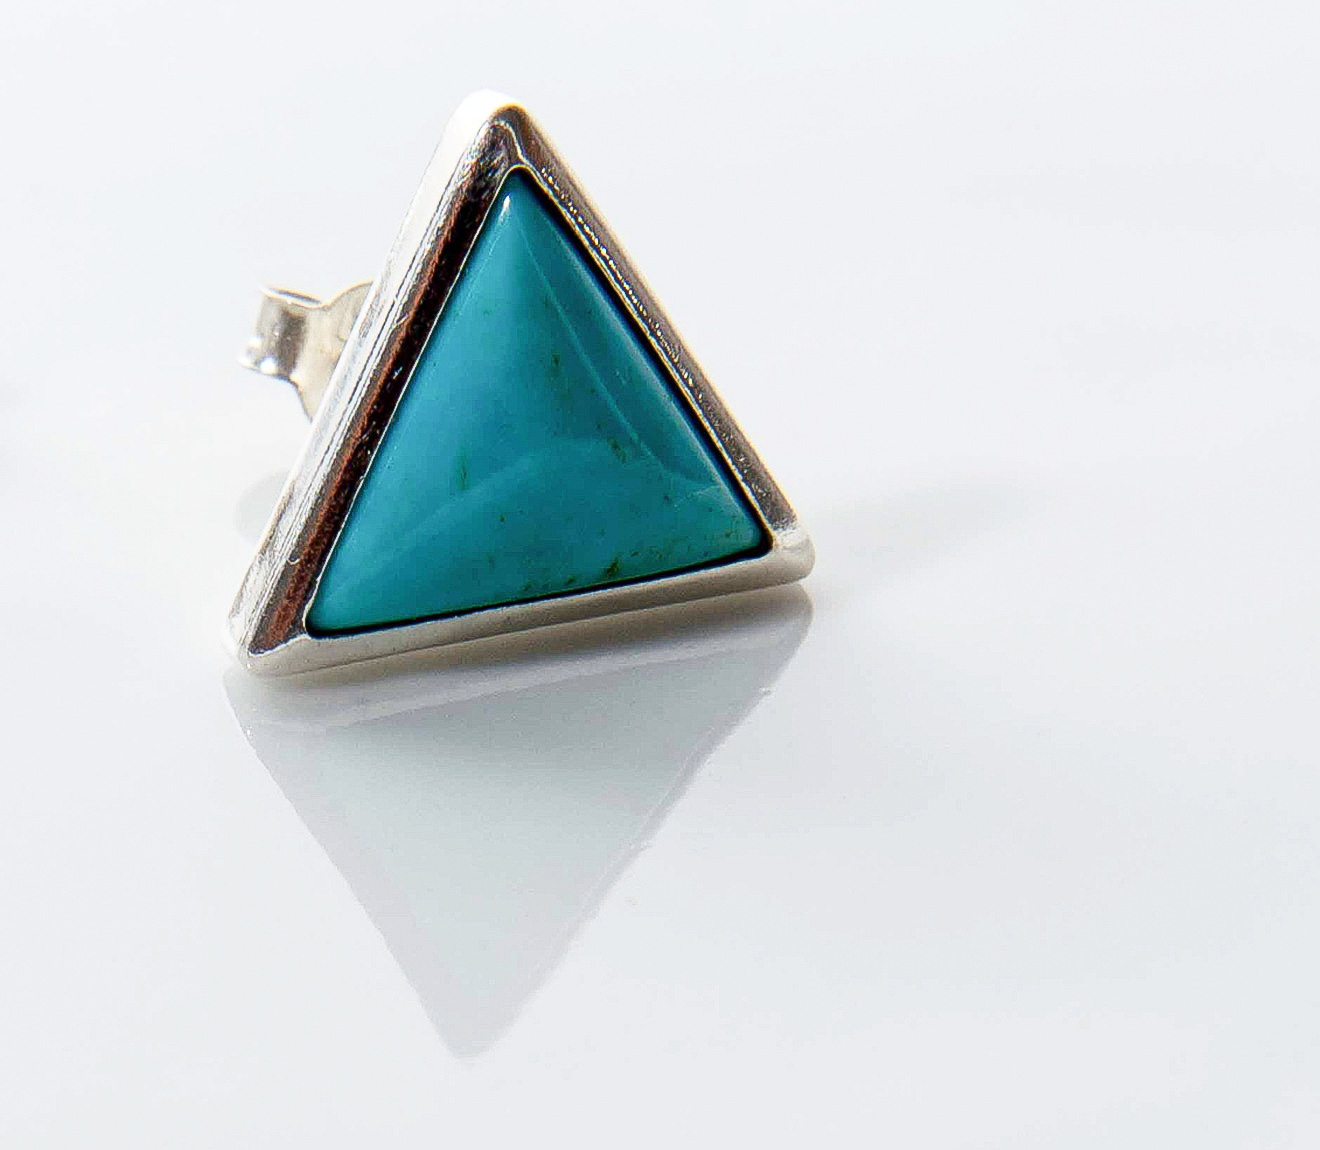 Triangular dualpurpose earrings,turquoise detail,crisolemon,turquoise